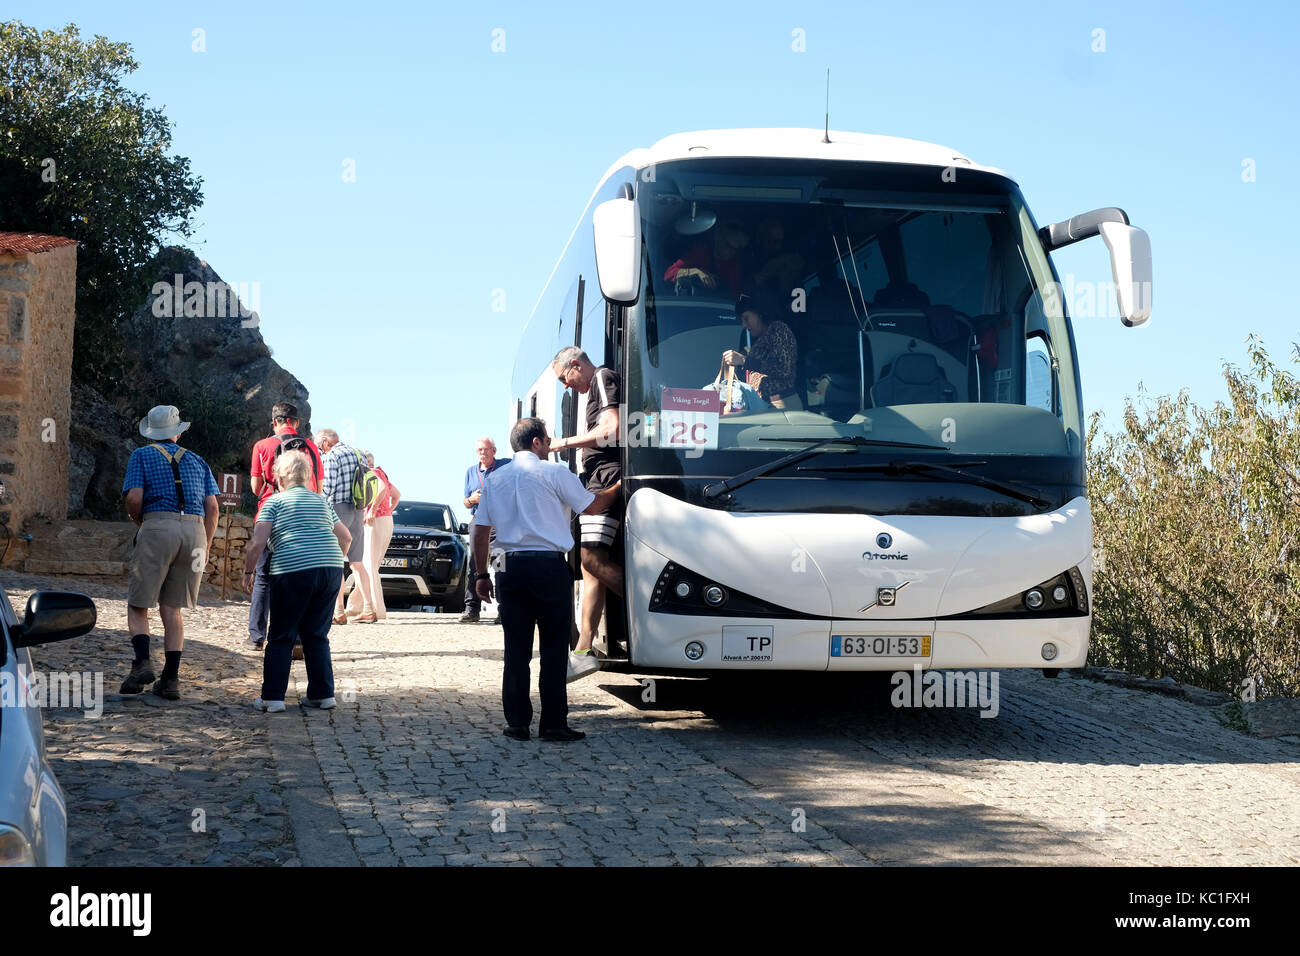 September 2017 - Vicking Kreuzfahrt Urlaub Reisebusse un Loading Touristen in Portugal. Stockfoto